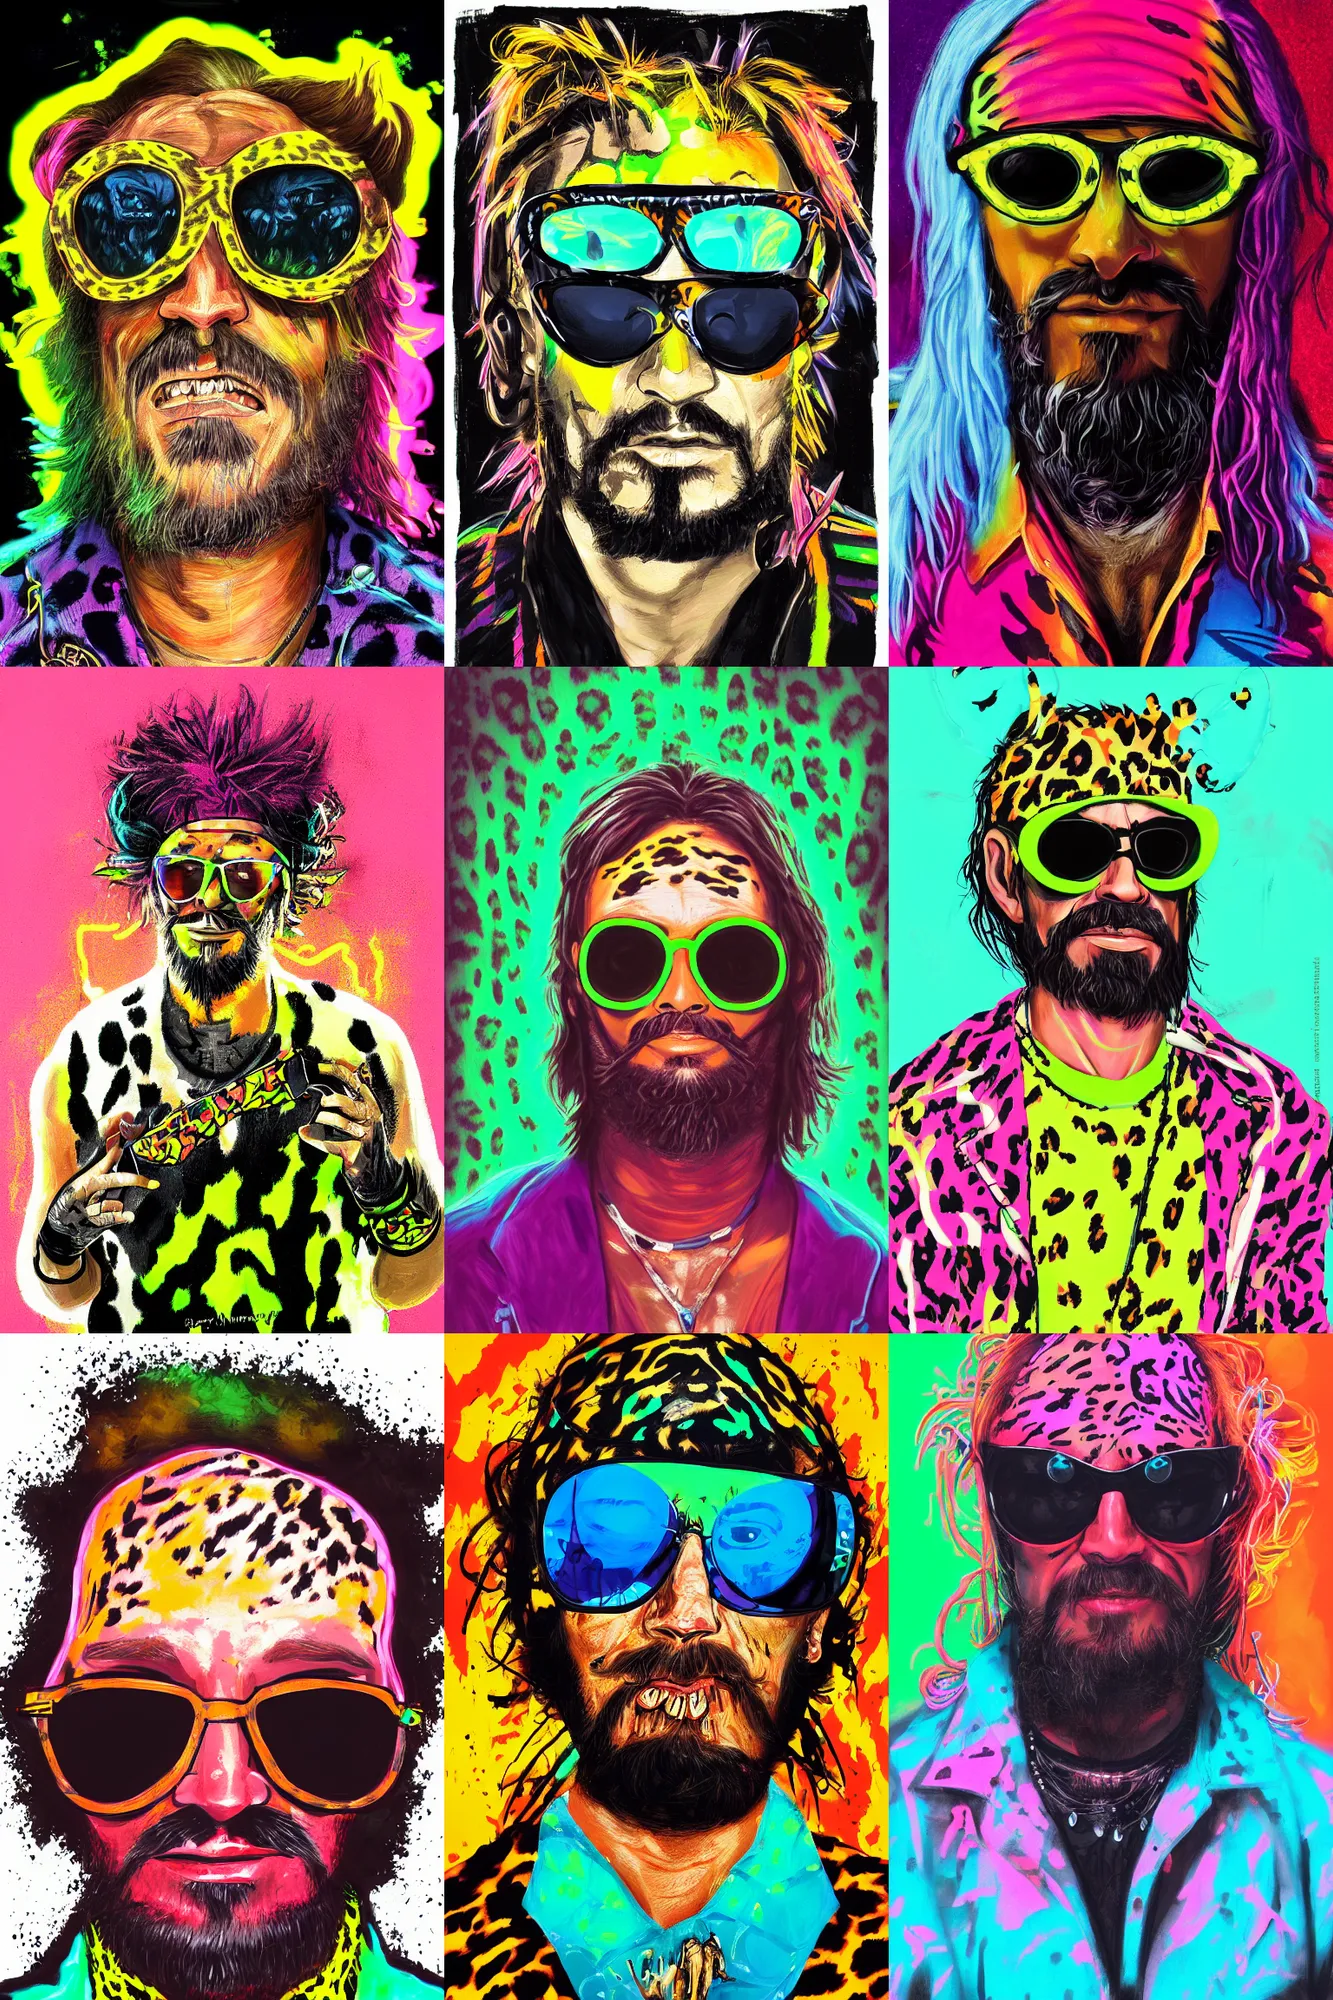 Prompt: portrait of Matcho Man Randy Savage, wearing sunglasses, neon leopard print clothes, by Anato Finnstark